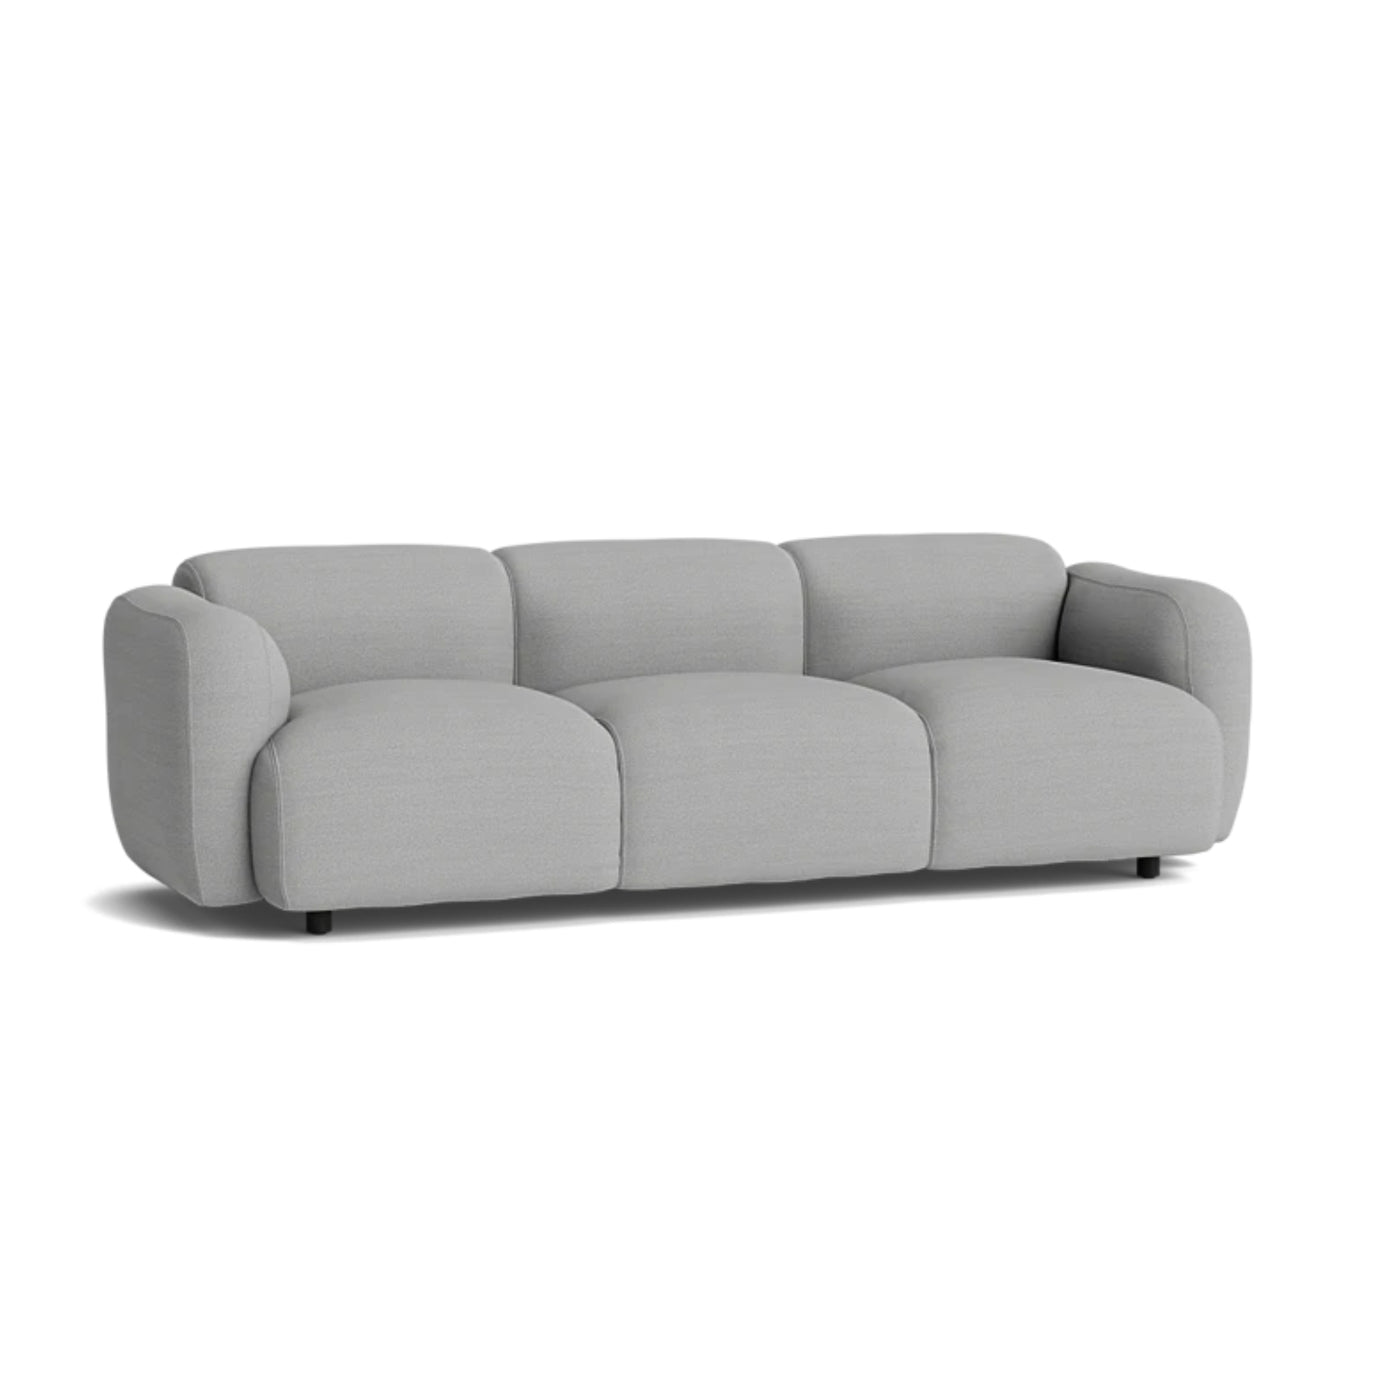 Normann Copenhagen Swell 3 Seater Sofa at someday designs. #colour_hallingdal-123